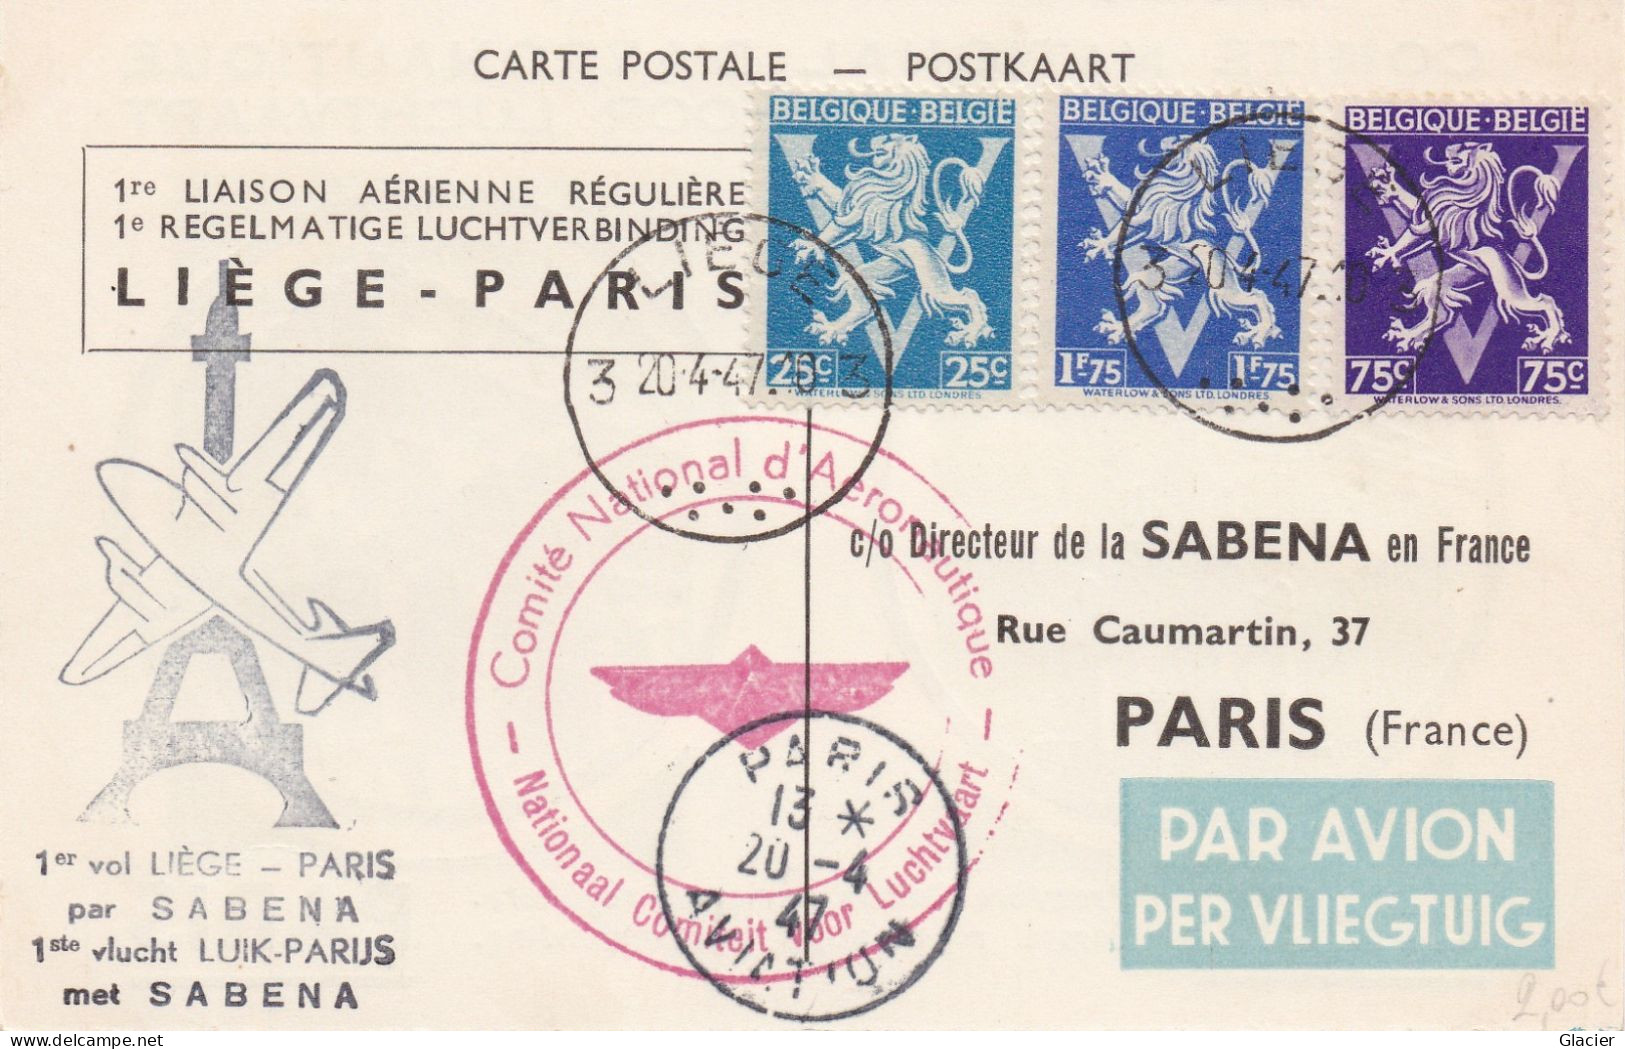 1er Vol LIEGE-PARIS Par Sabena Cachet Comité National D'Aéronautique 20-4-19 - Briefe U. Dokumente